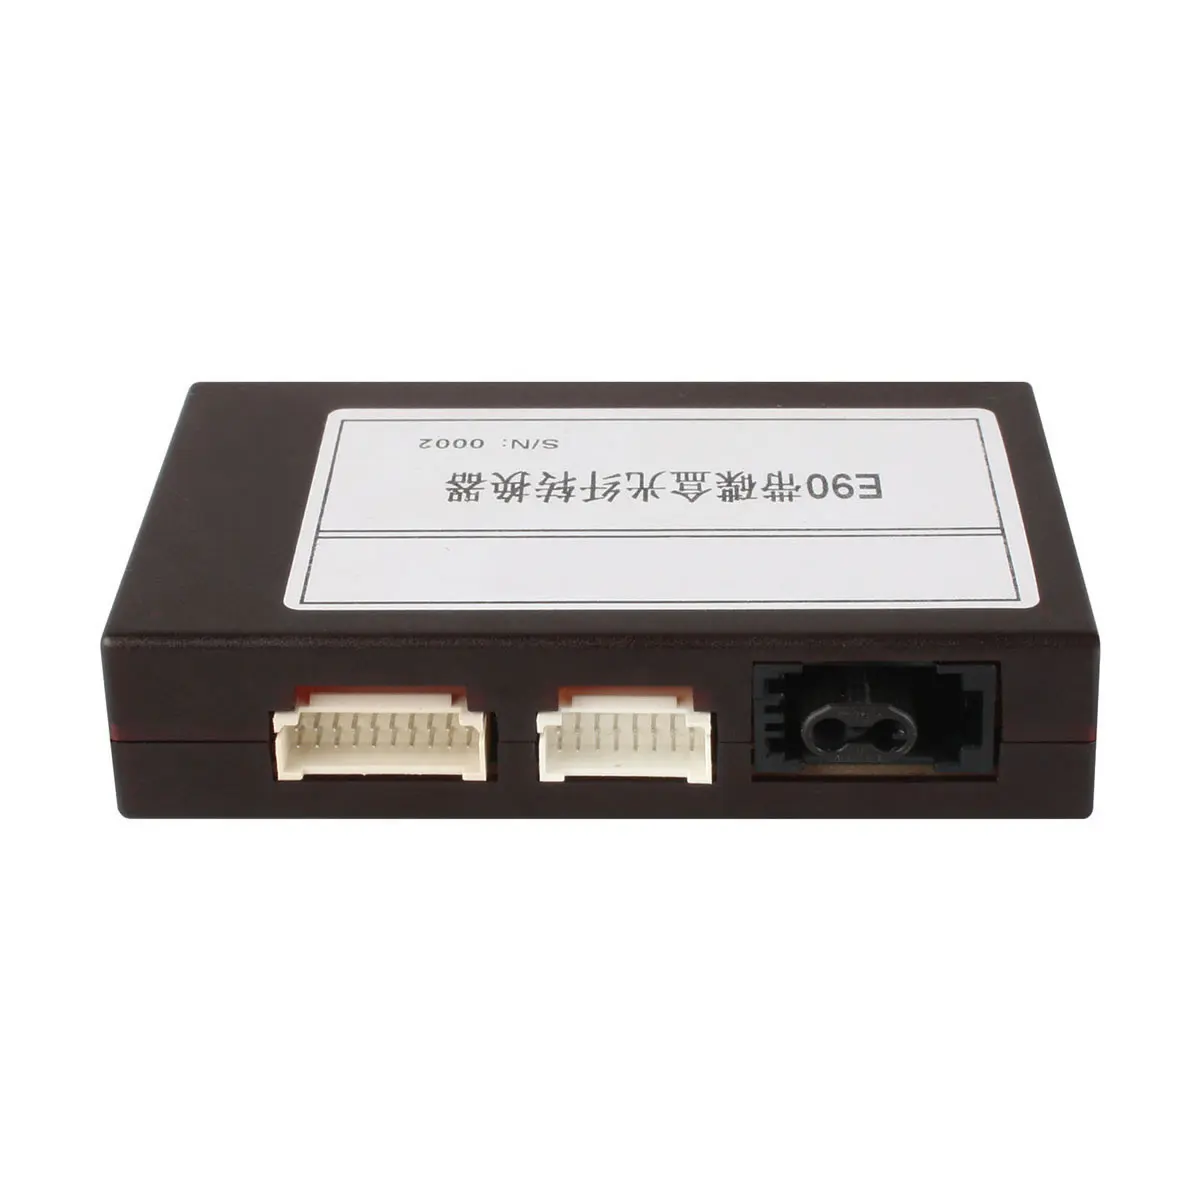 Ownice E90 дисковая коробка с волоконно-оптическими преобразователями